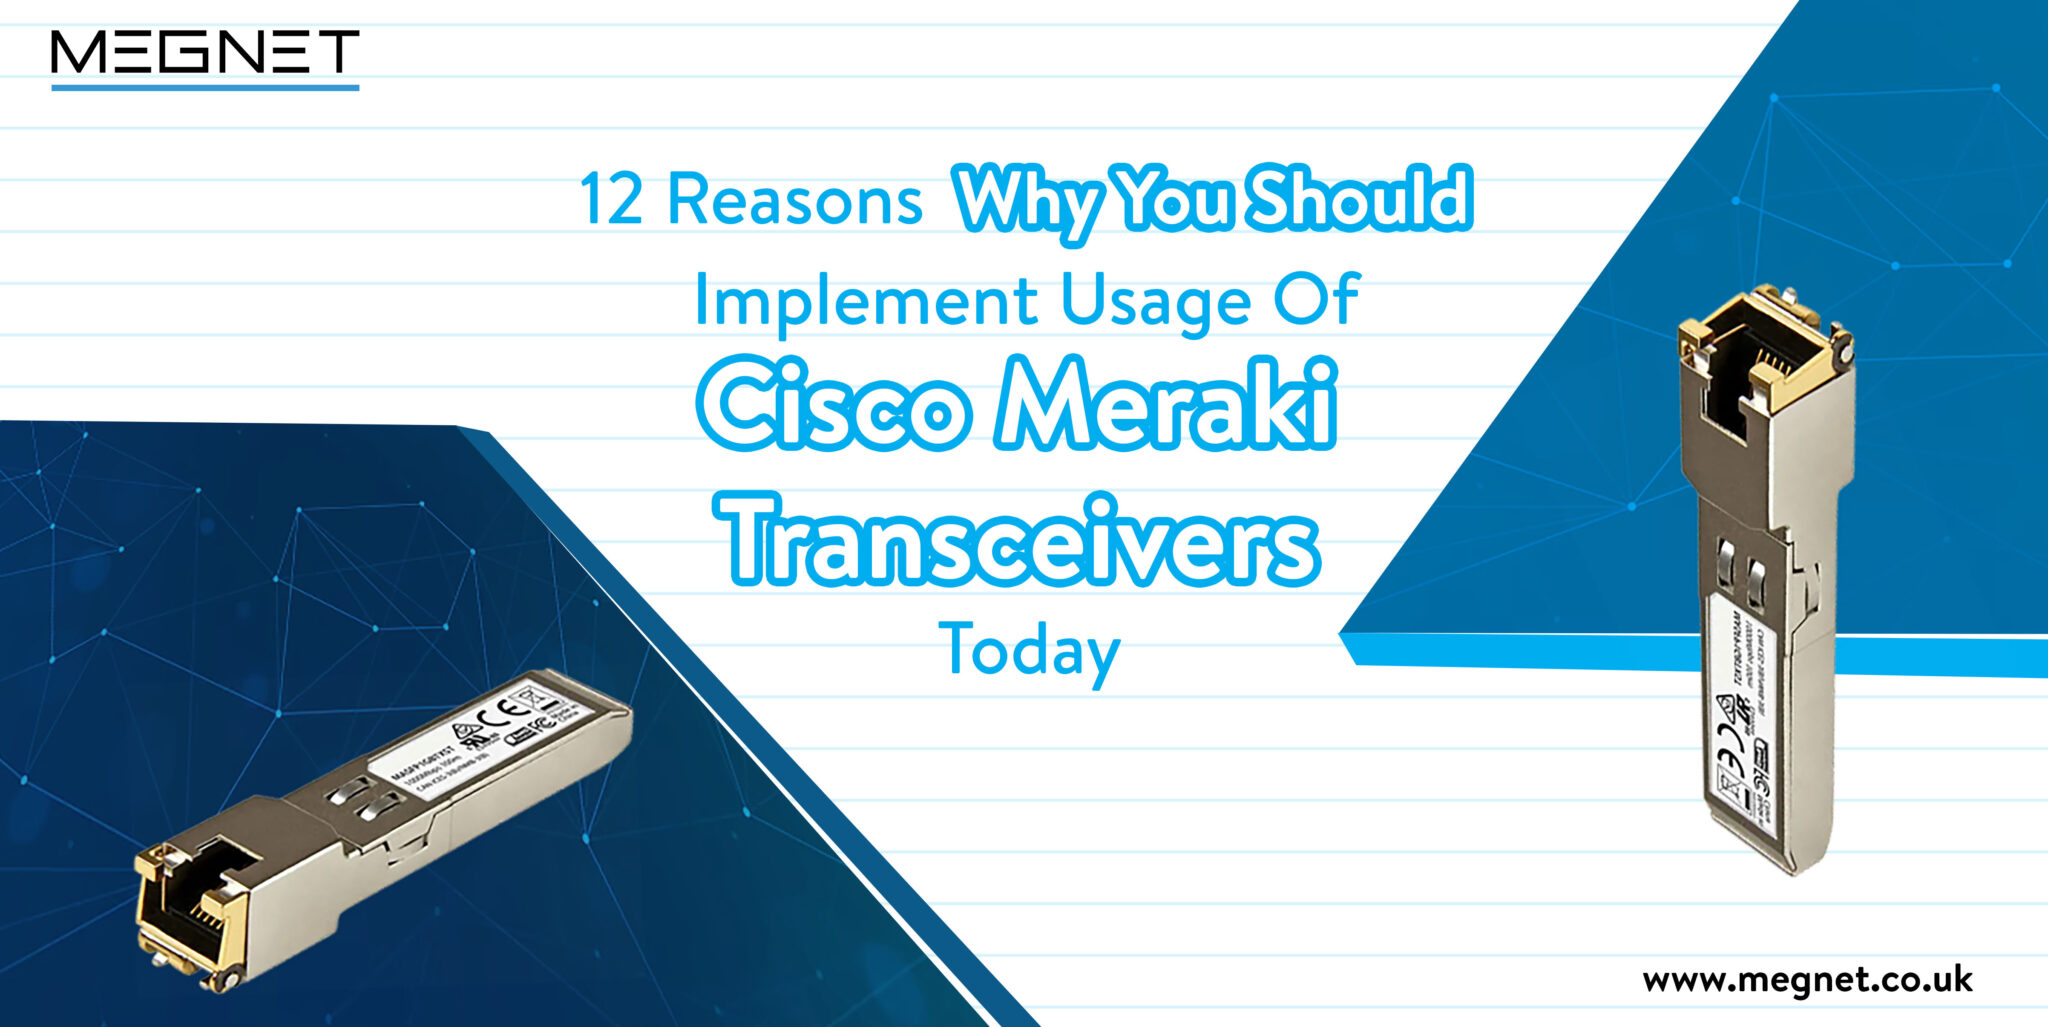 Cisco Meraki Transceivers